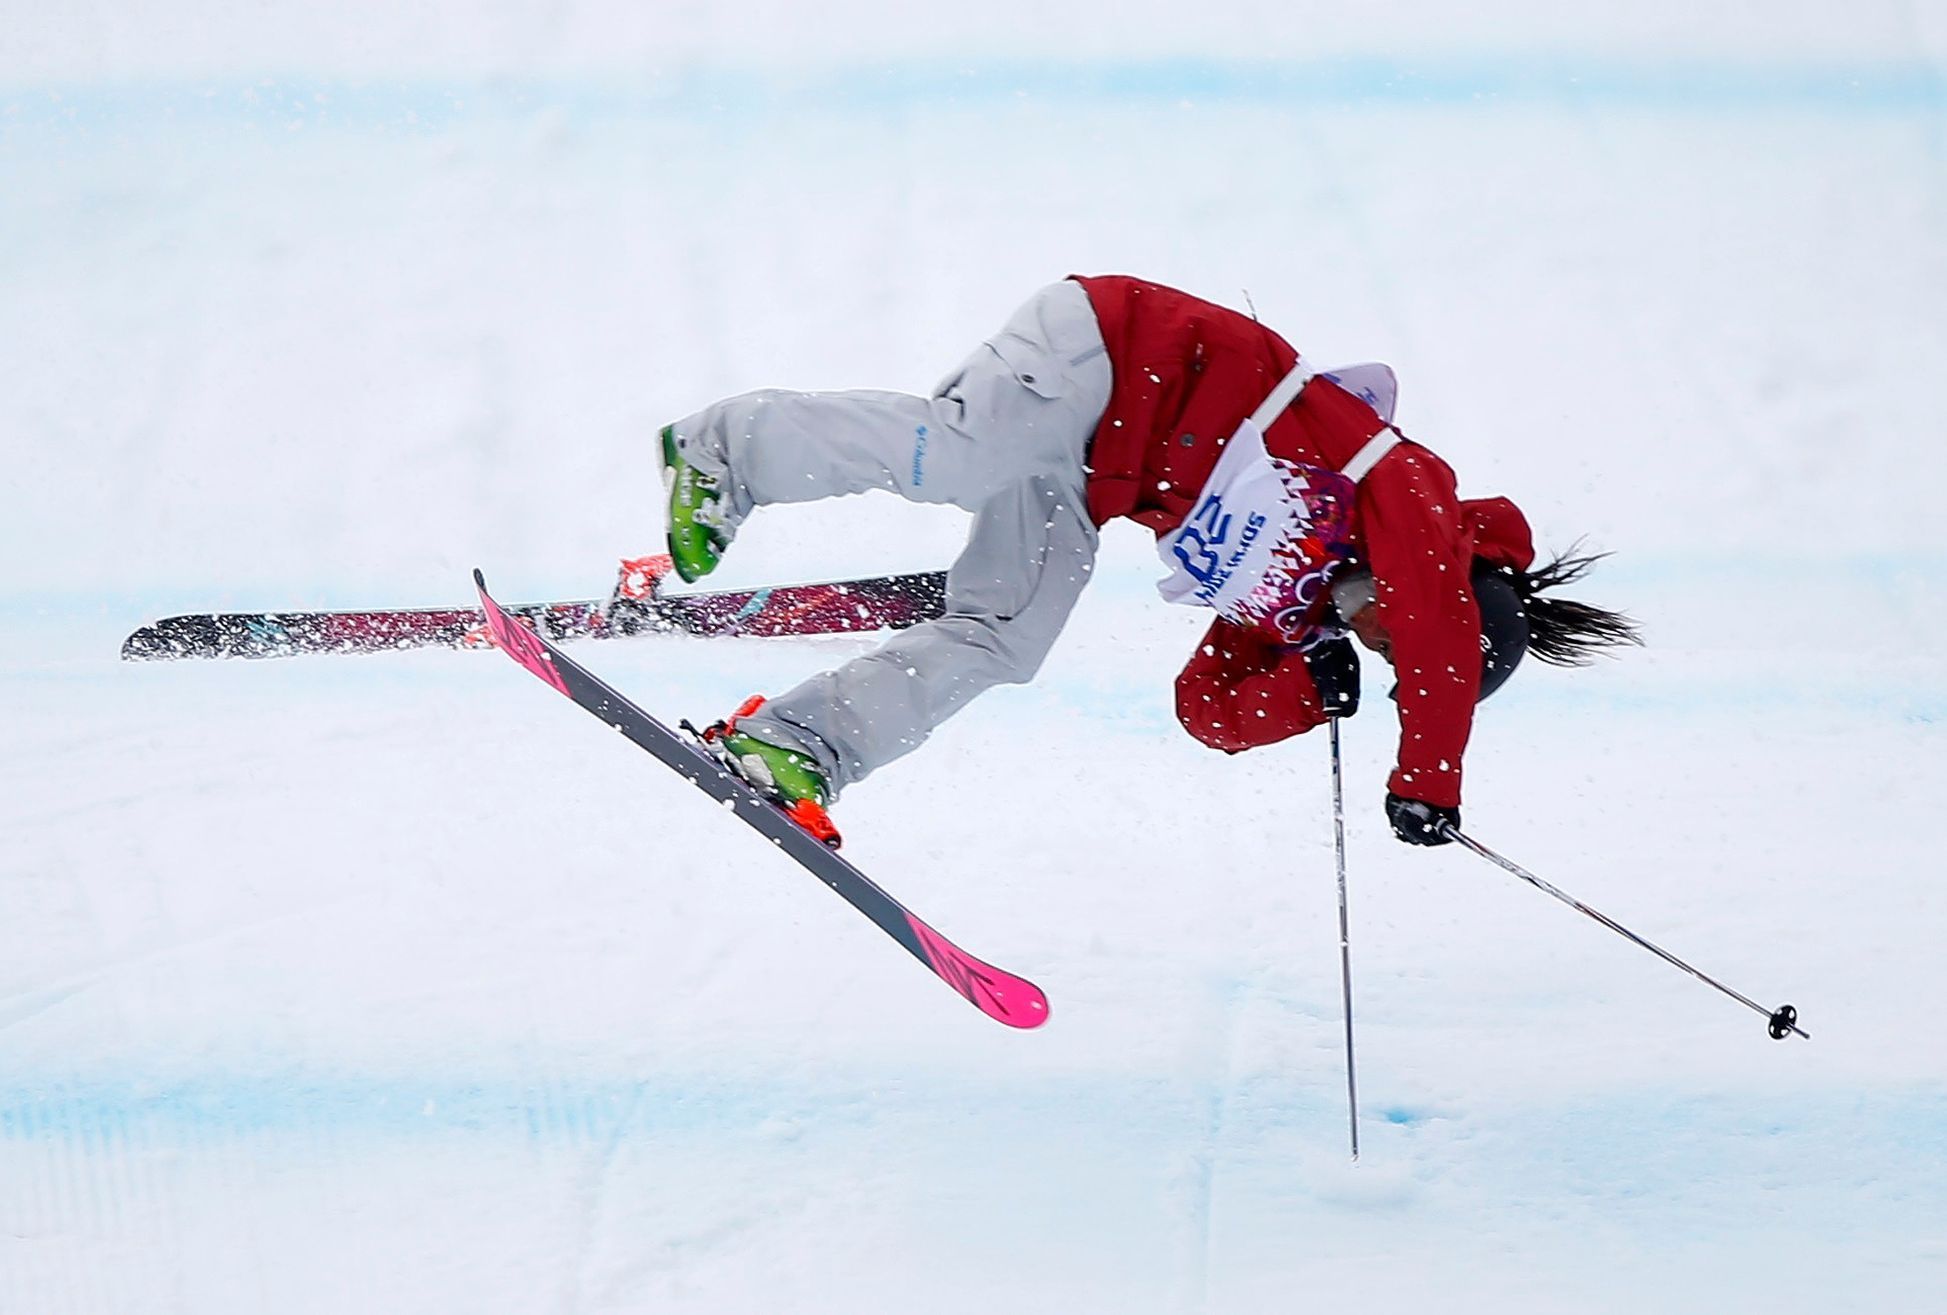 Kanaďanka Yuki Tsubotaová na OH Soči 2014 (slopestyle)